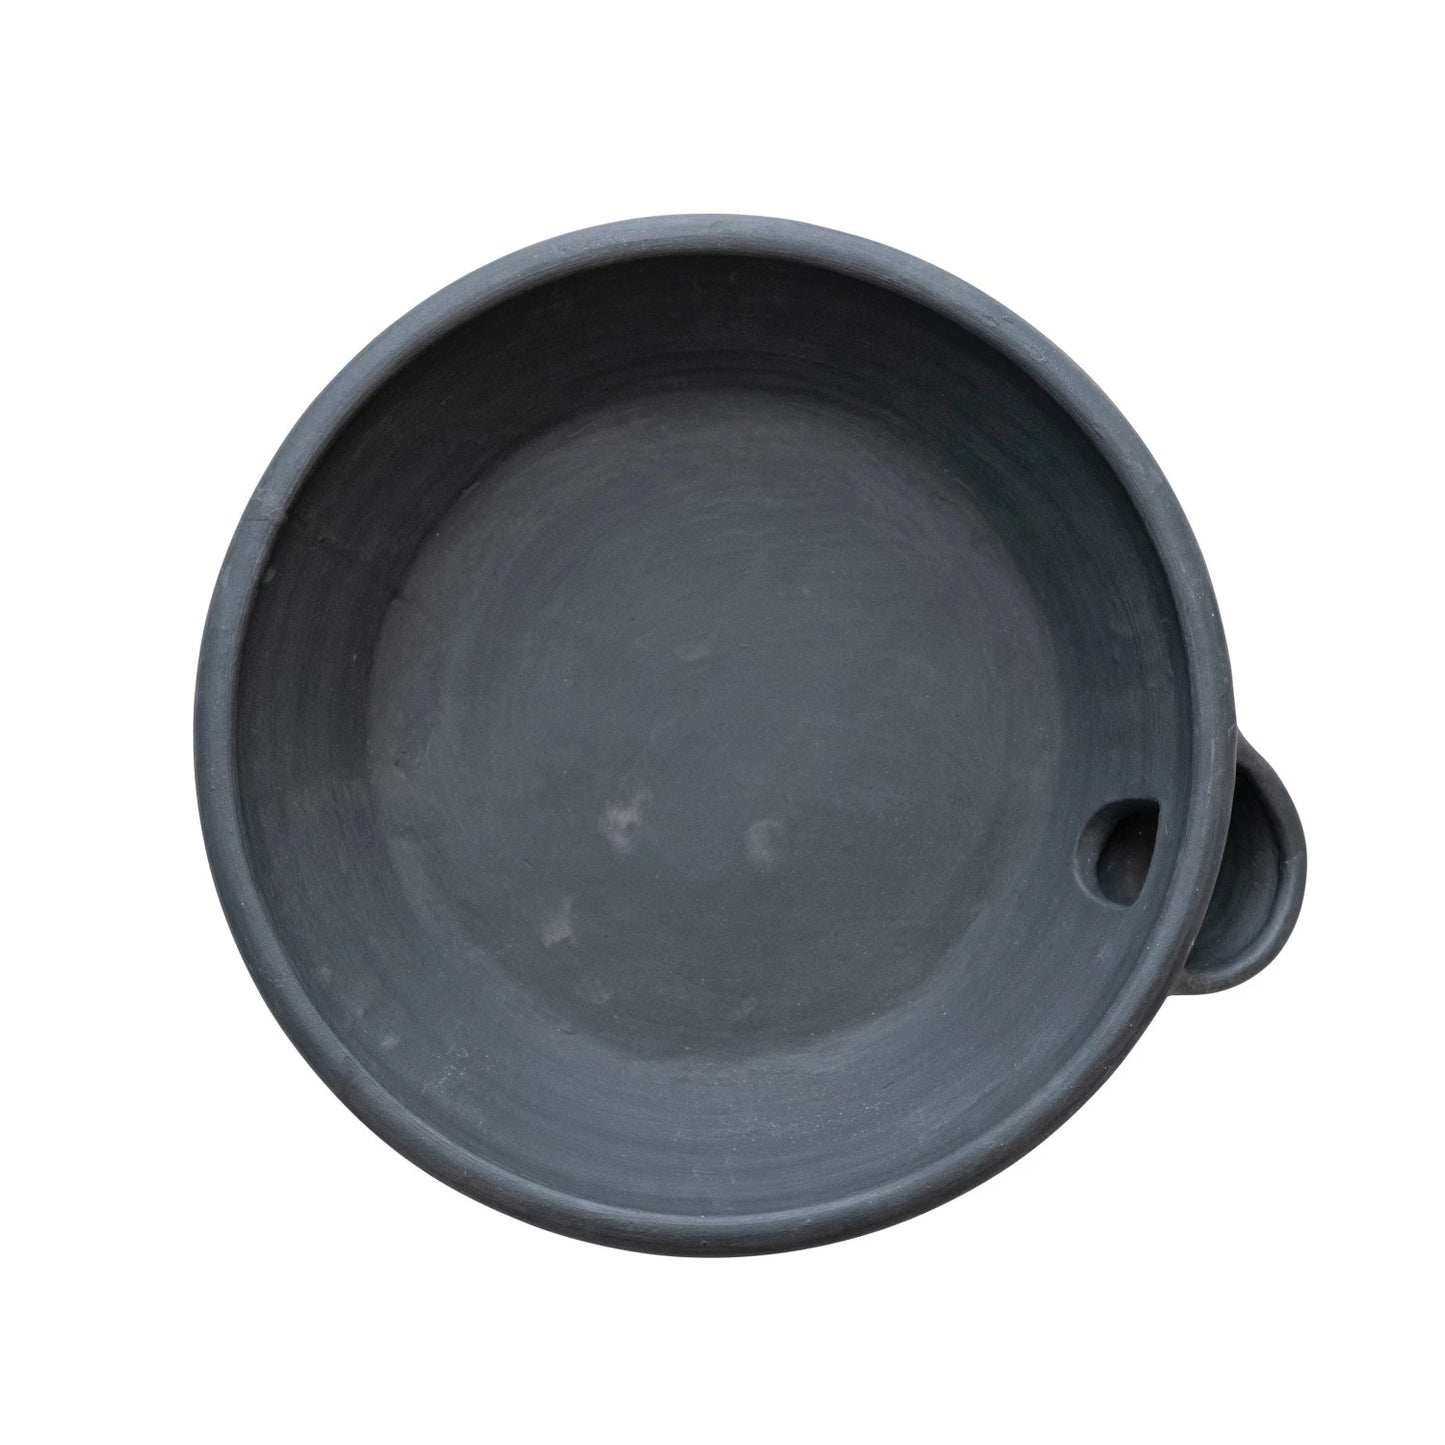 Decorative Vintage Reproduction Clay Dahi Bowl, Black